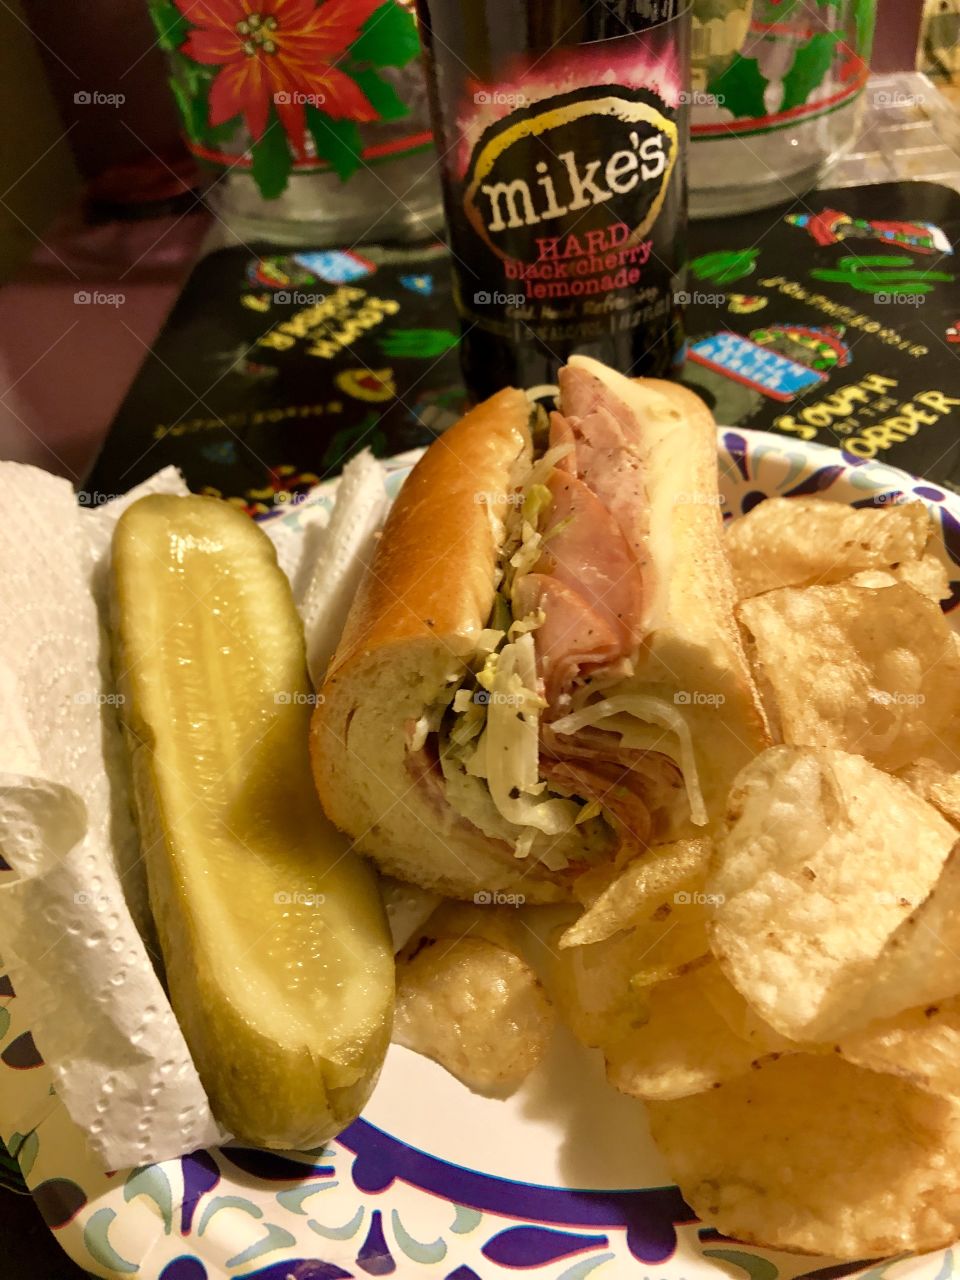 My favorite sandwich...Mina 1017 